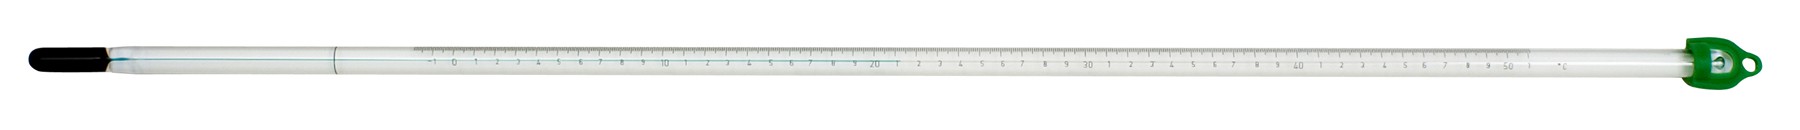 H-B DURAC Plus Precision Liquid-In-Glass Thermometer; 30 to 124F, Total Immersion, Organic Liquid Fill